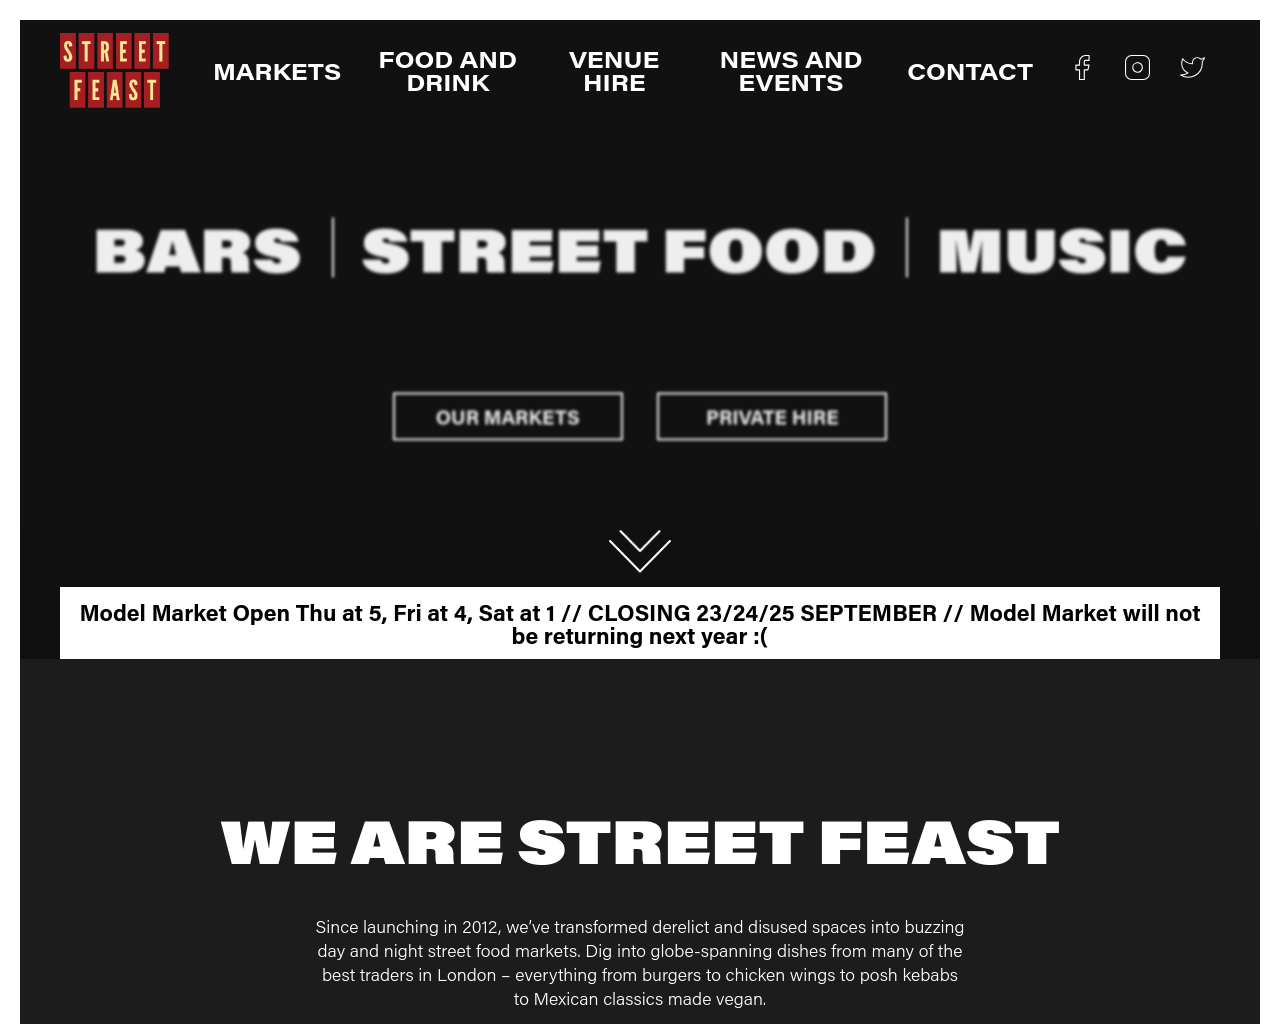 streetfeast.com